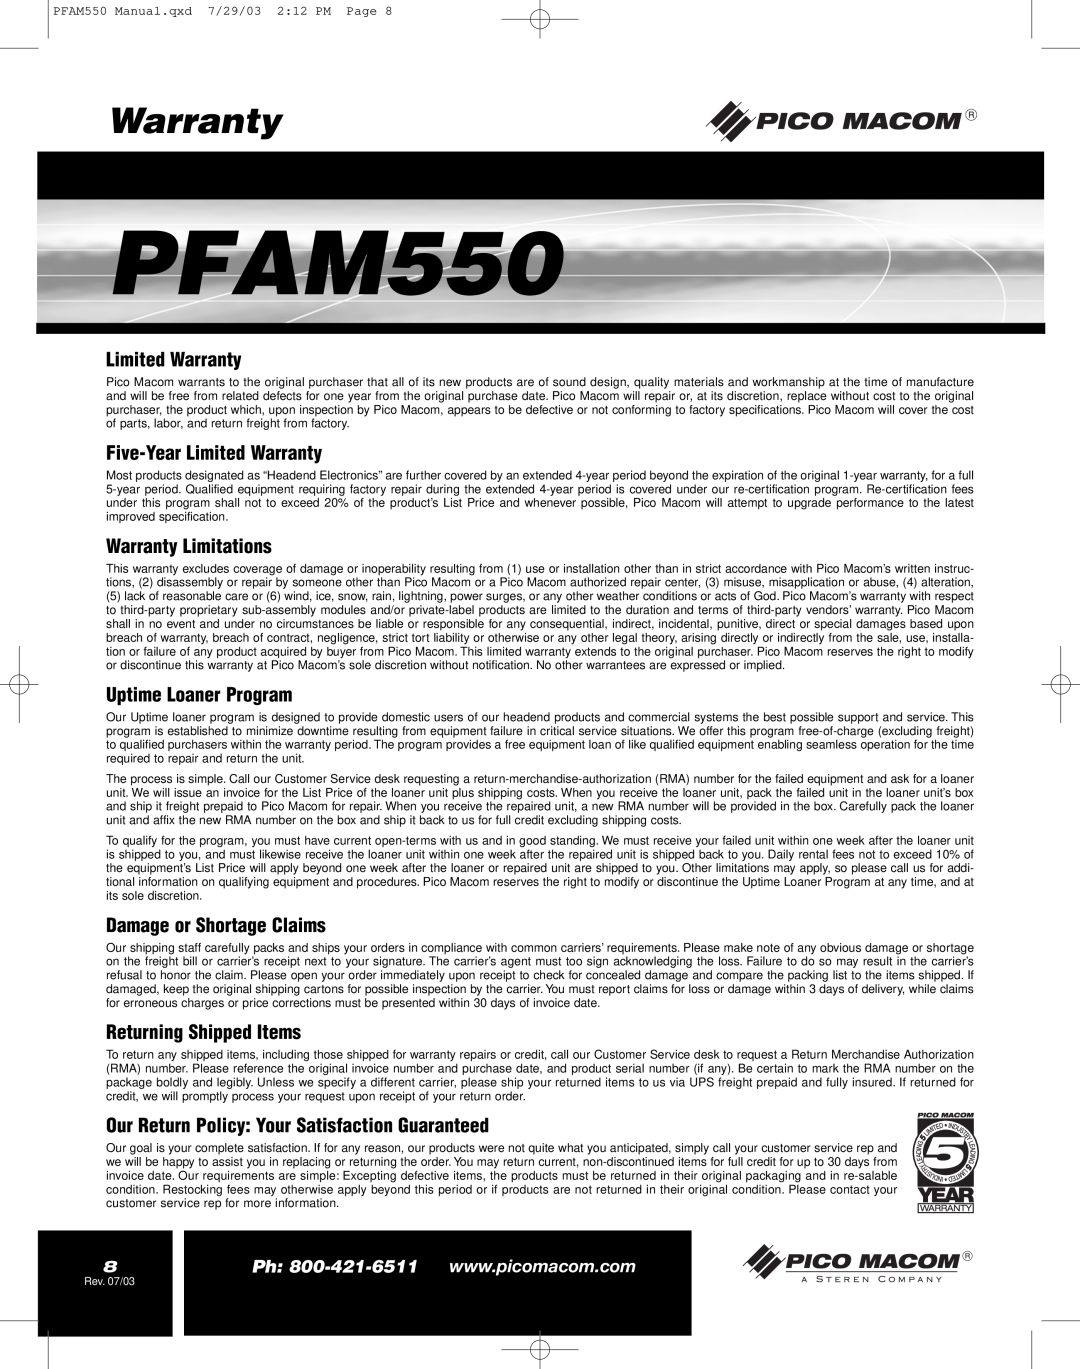 Pico Macom PFAM550 Five-YearLimited Warranty, Warranty Limitations, Uptime Loaner Program, Returning Shipped Items 